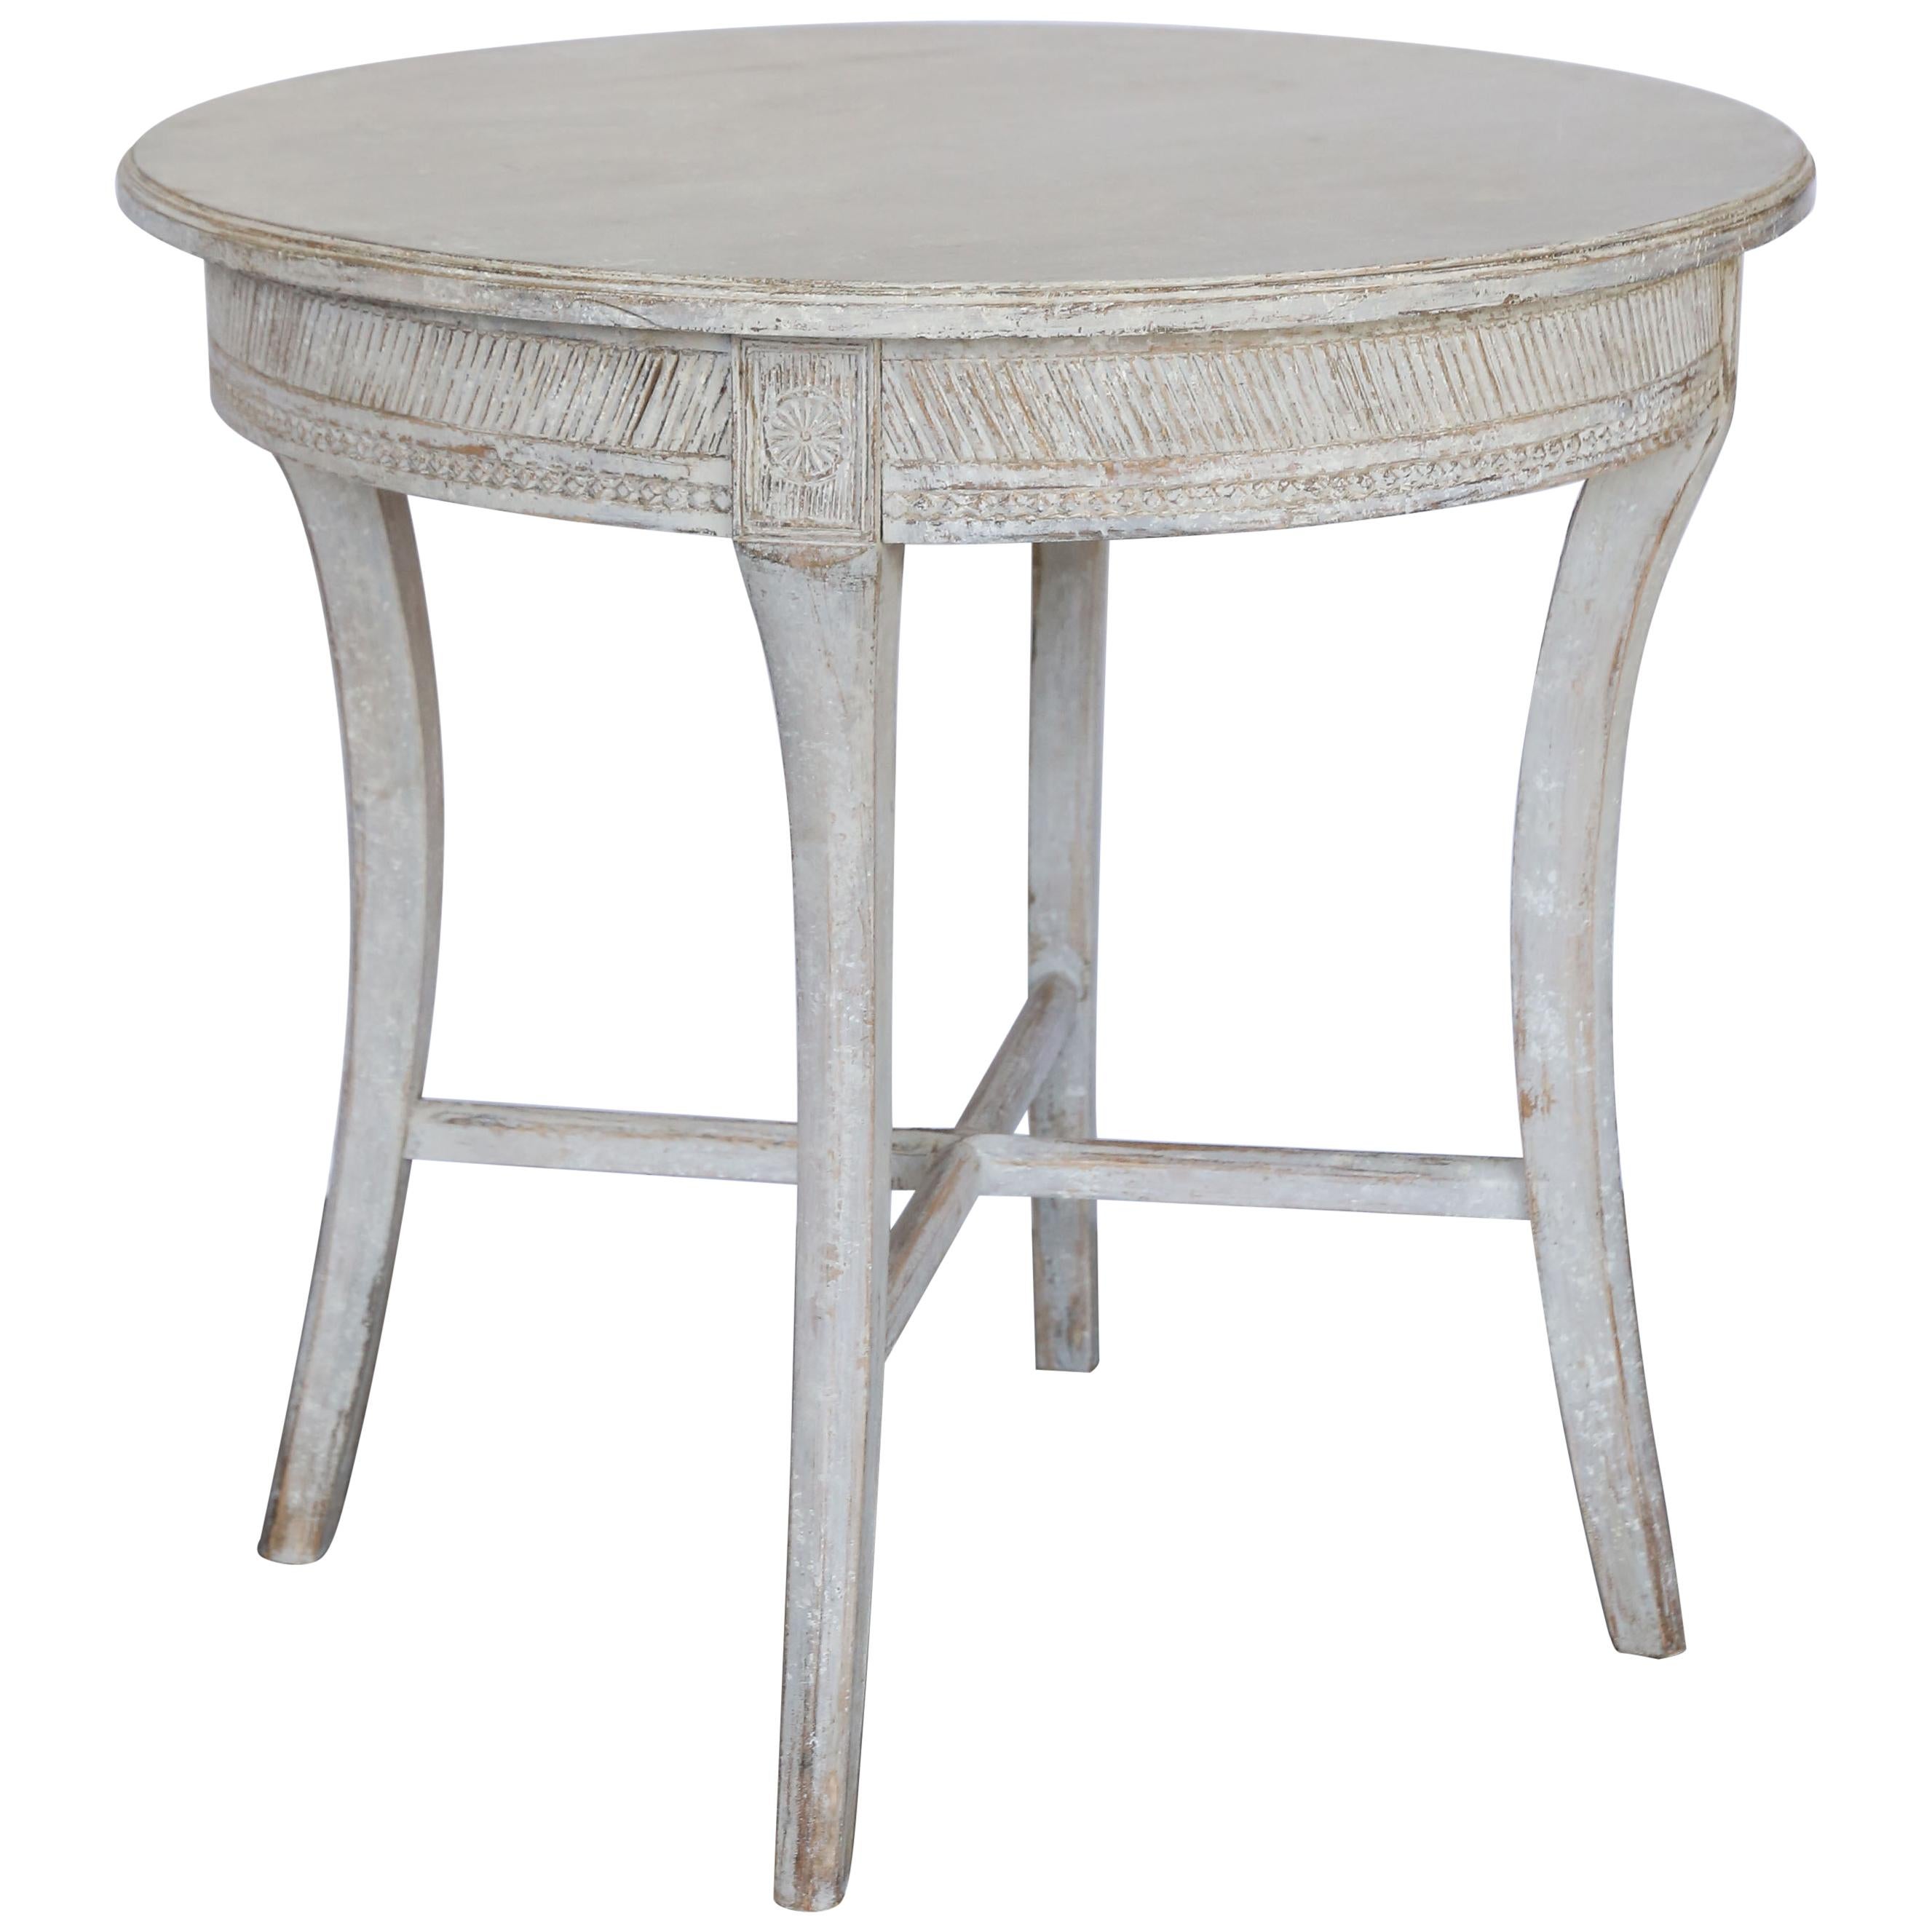 19th Century Round Gustavian Table